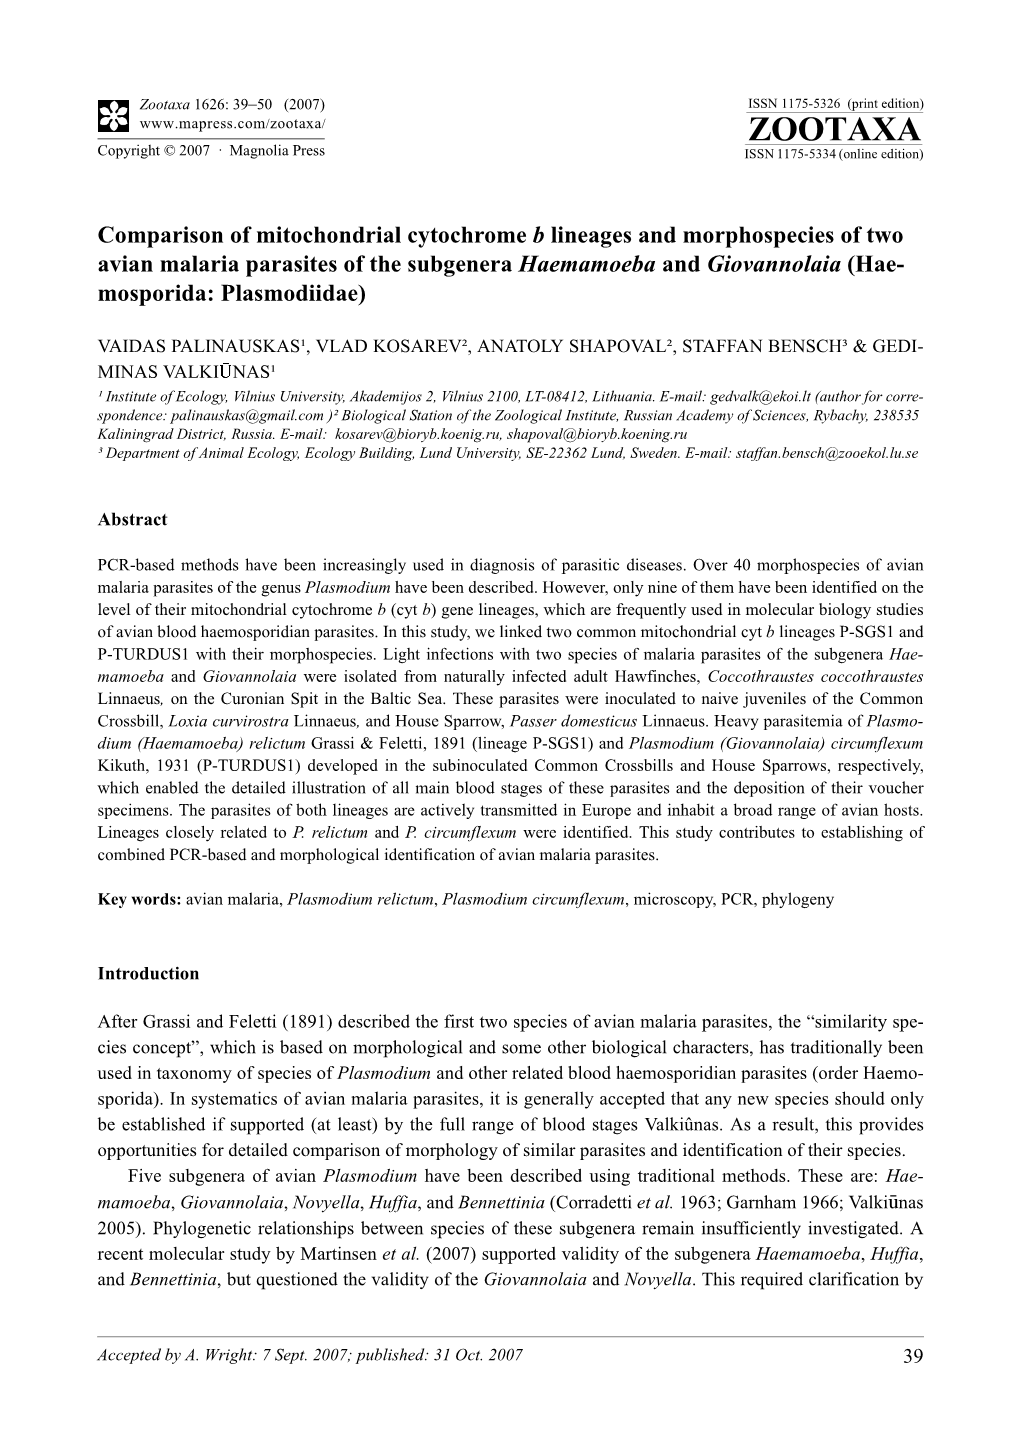 Zootaxa,Comparison of Mitochondrial Cytochrome B